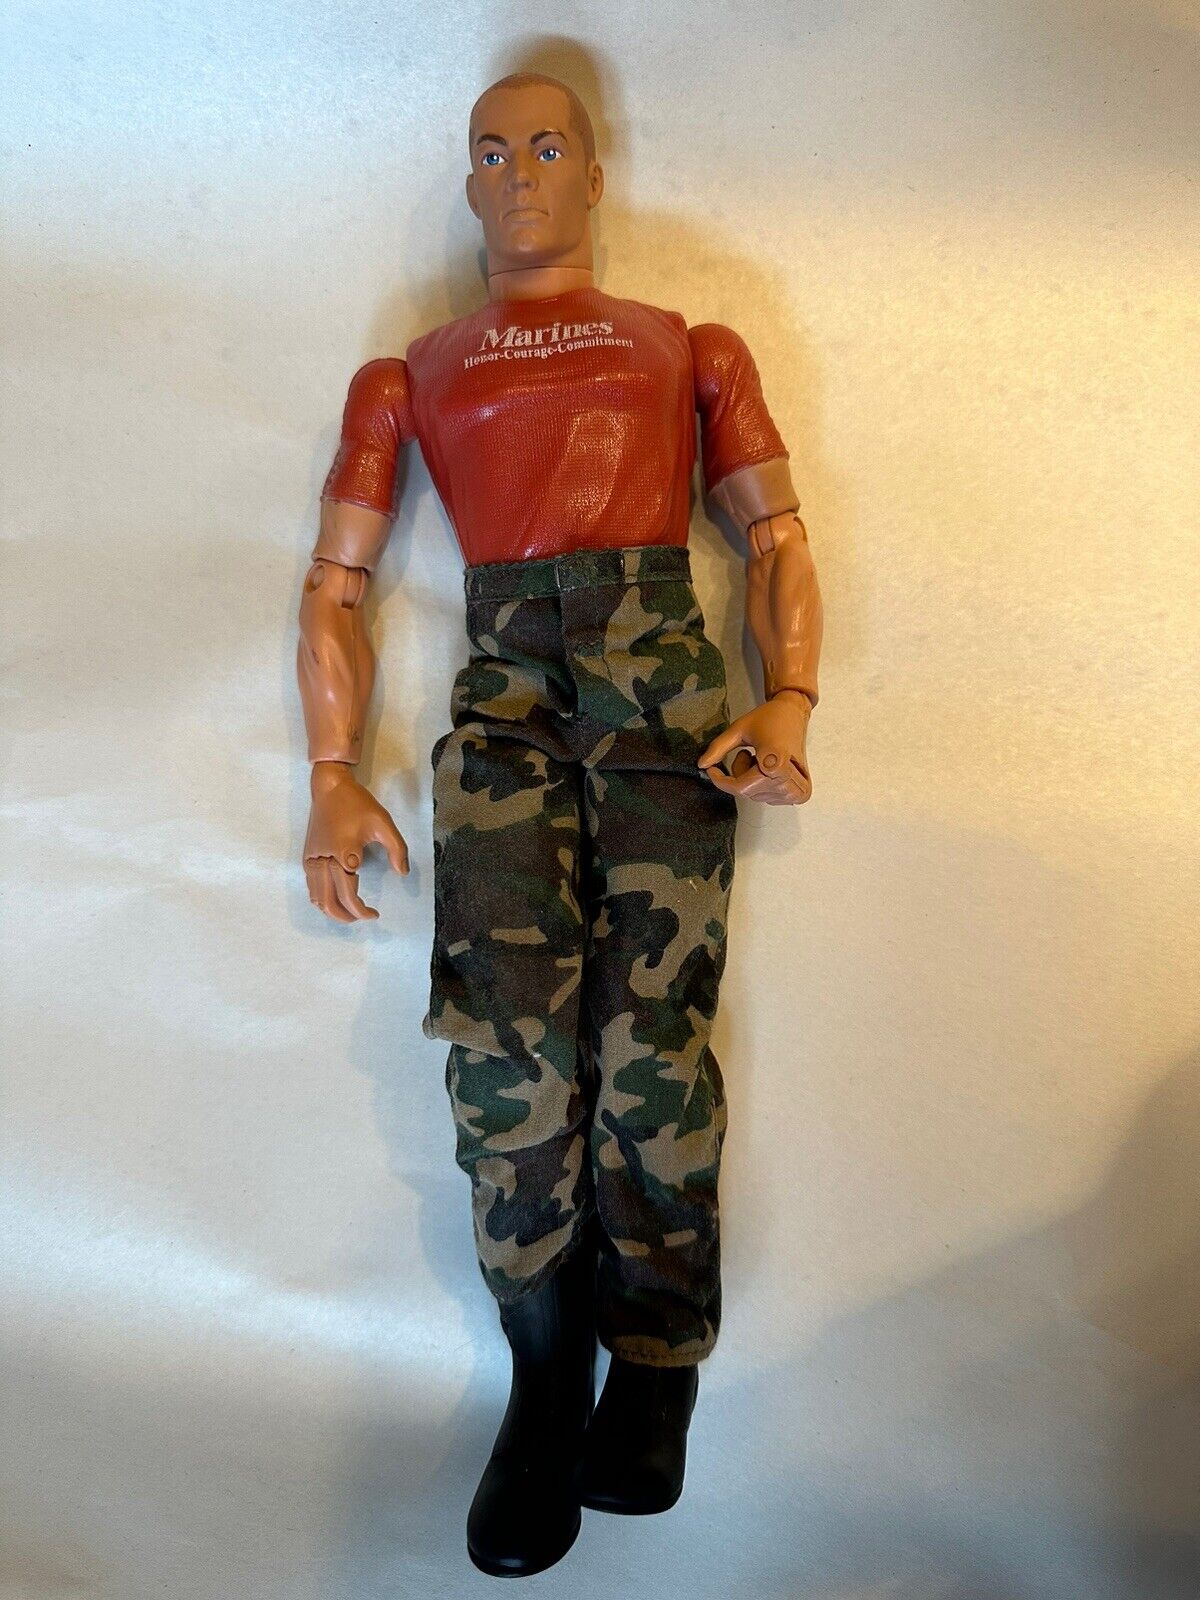 1996 Hasbro 12" GI Joe Action Figure -  Marine